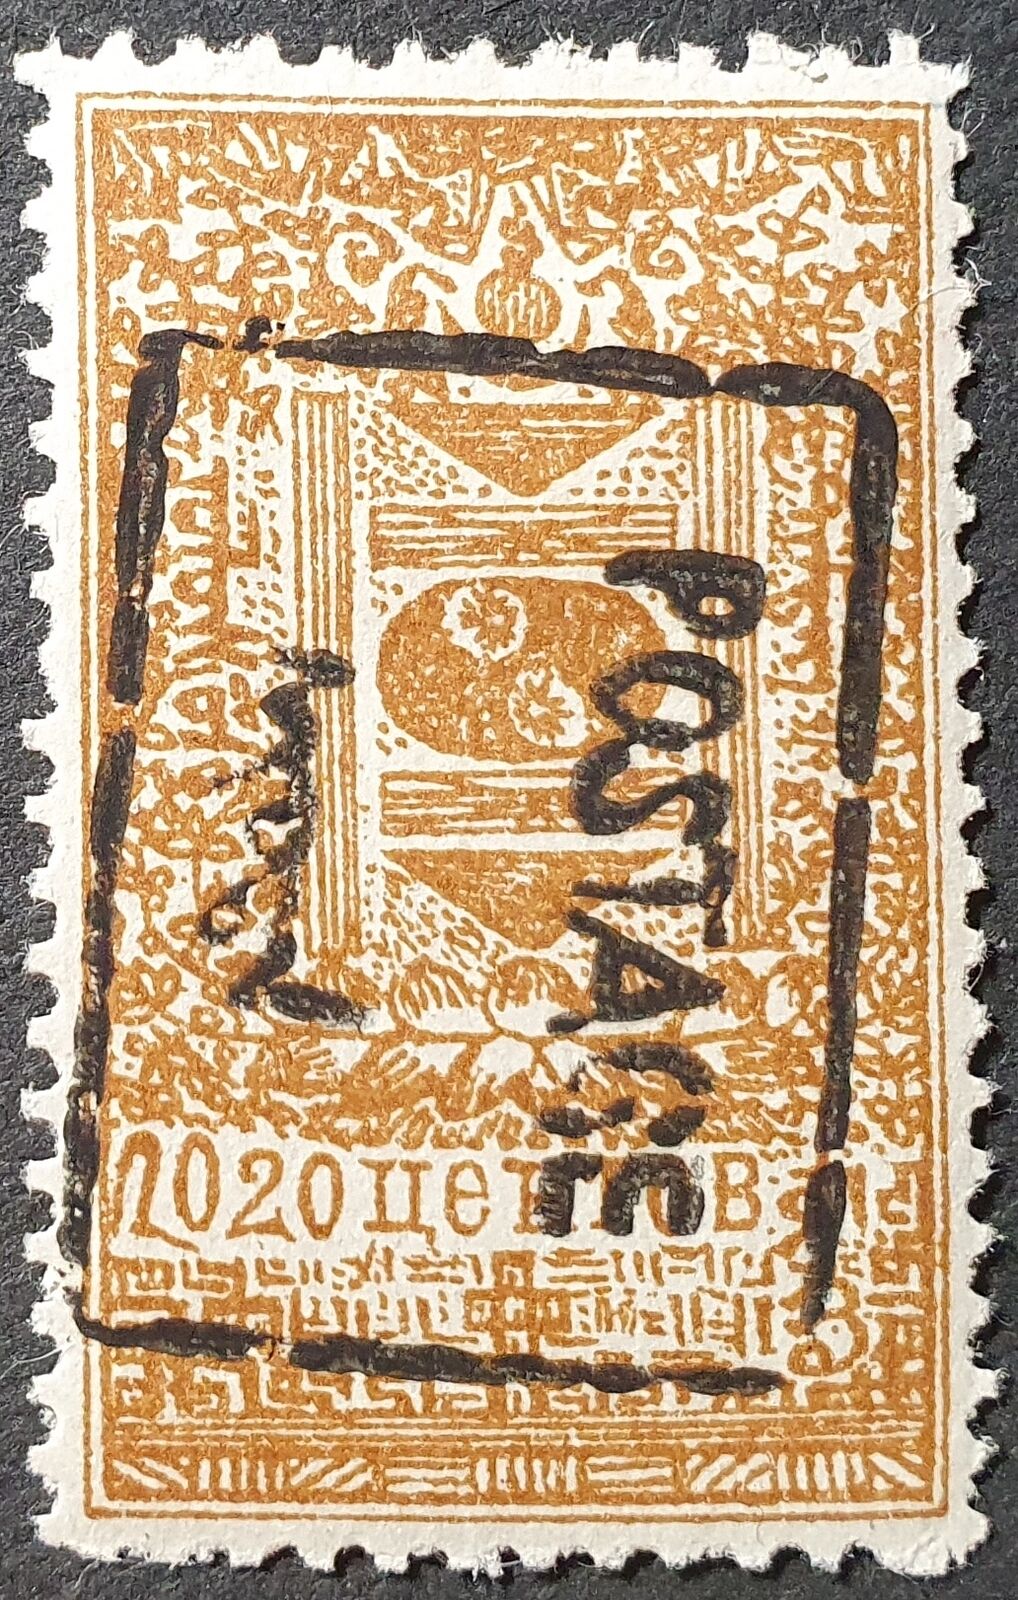 Mongolia 1926 Revenue 20C overprinted 'Postage' in black, Louzhnikov type MH